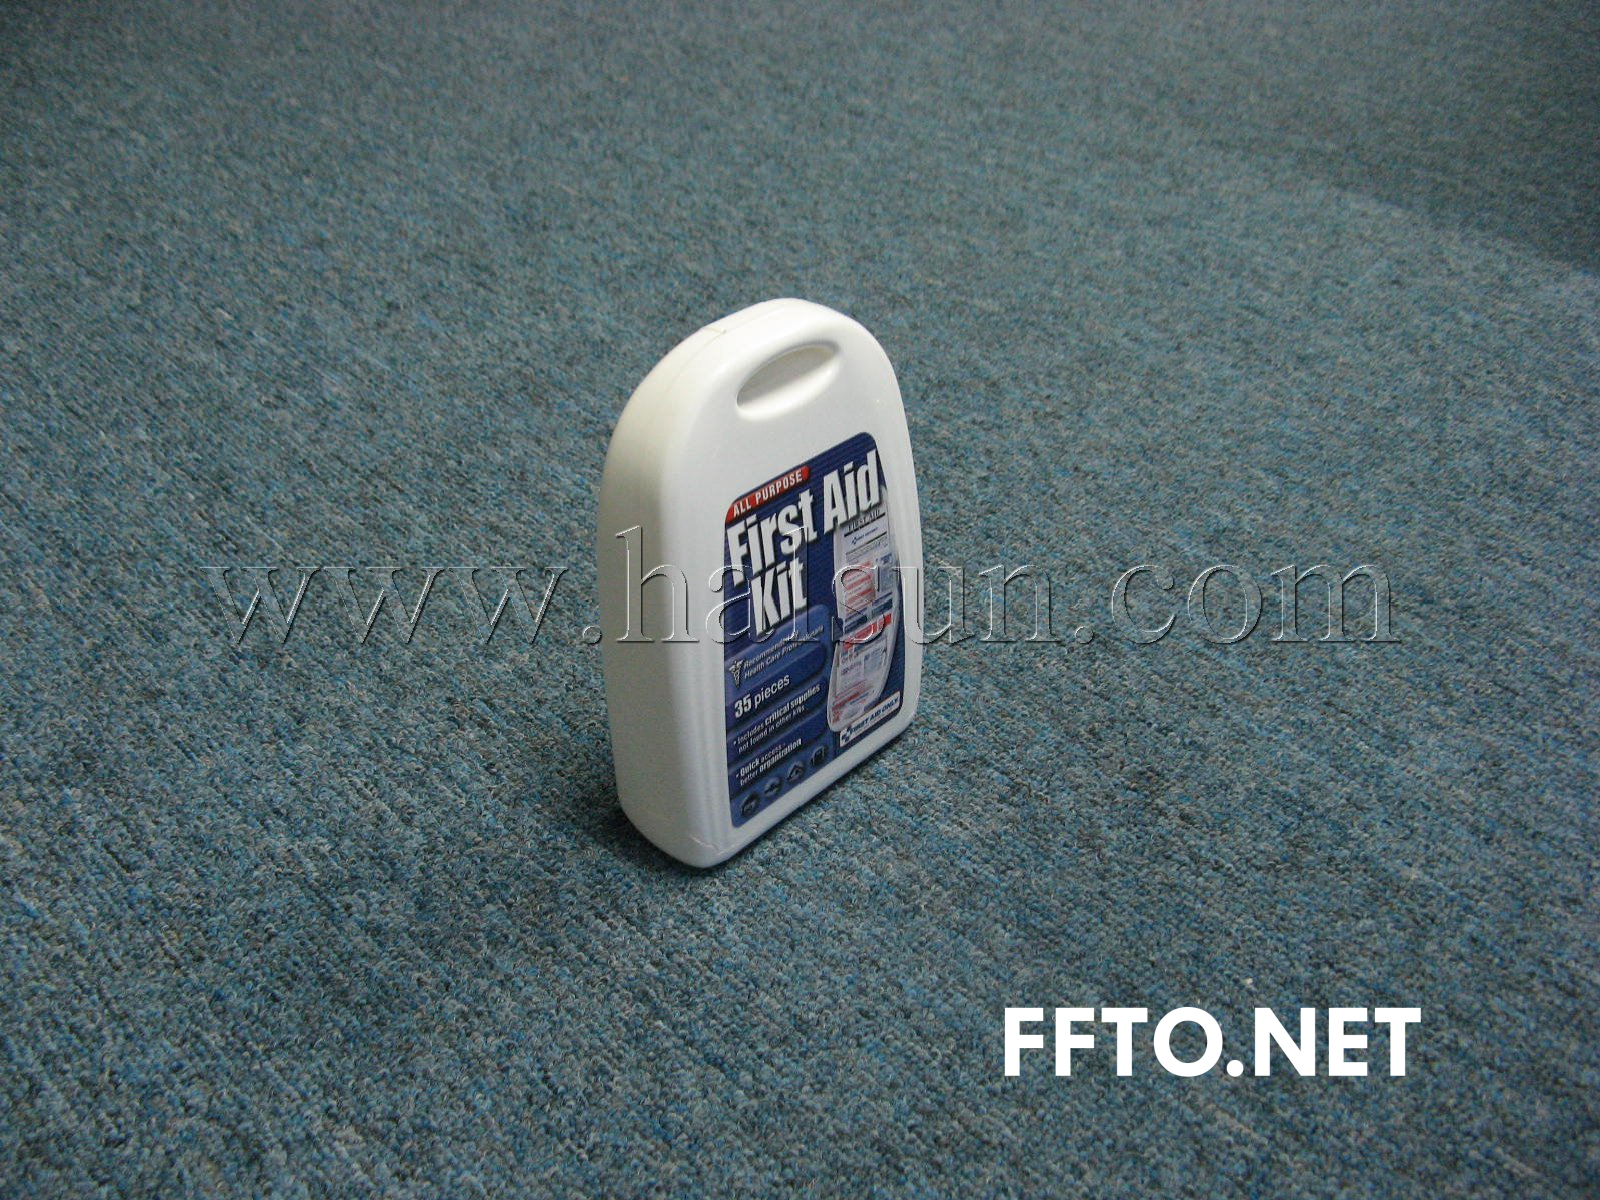 First Aid Kits,HSFAK008